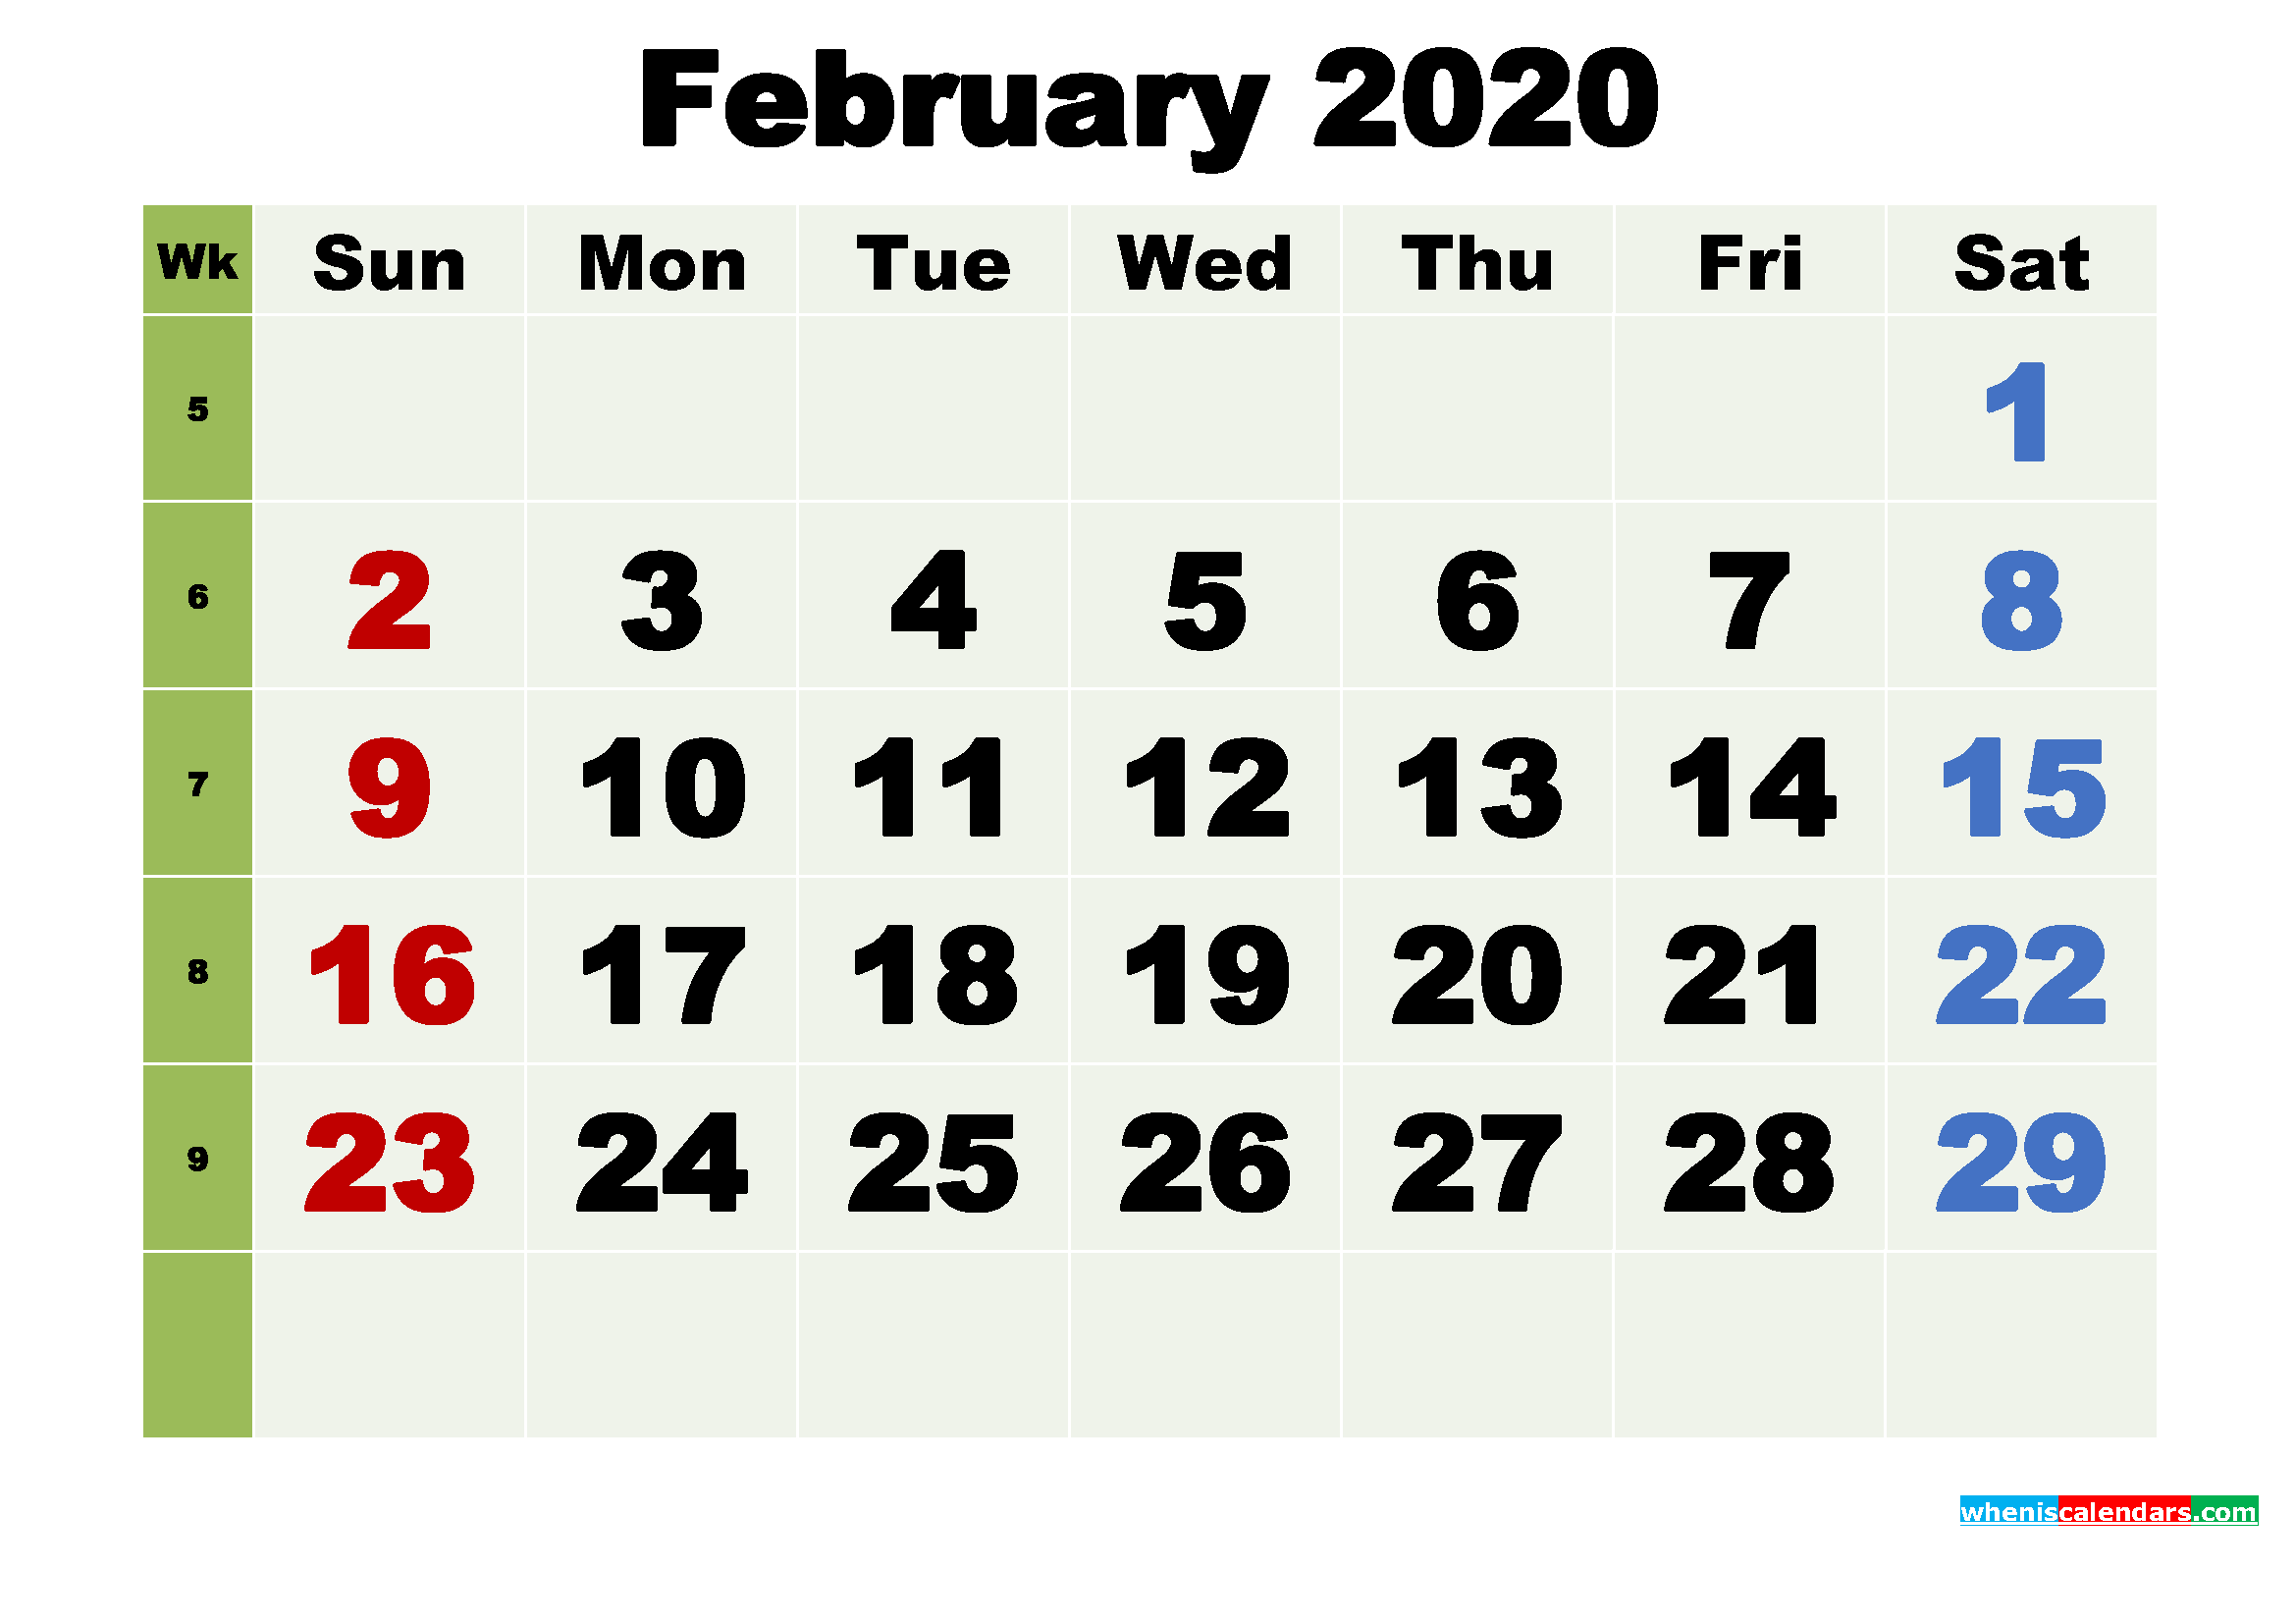 February 2020 Printable Calendar Template